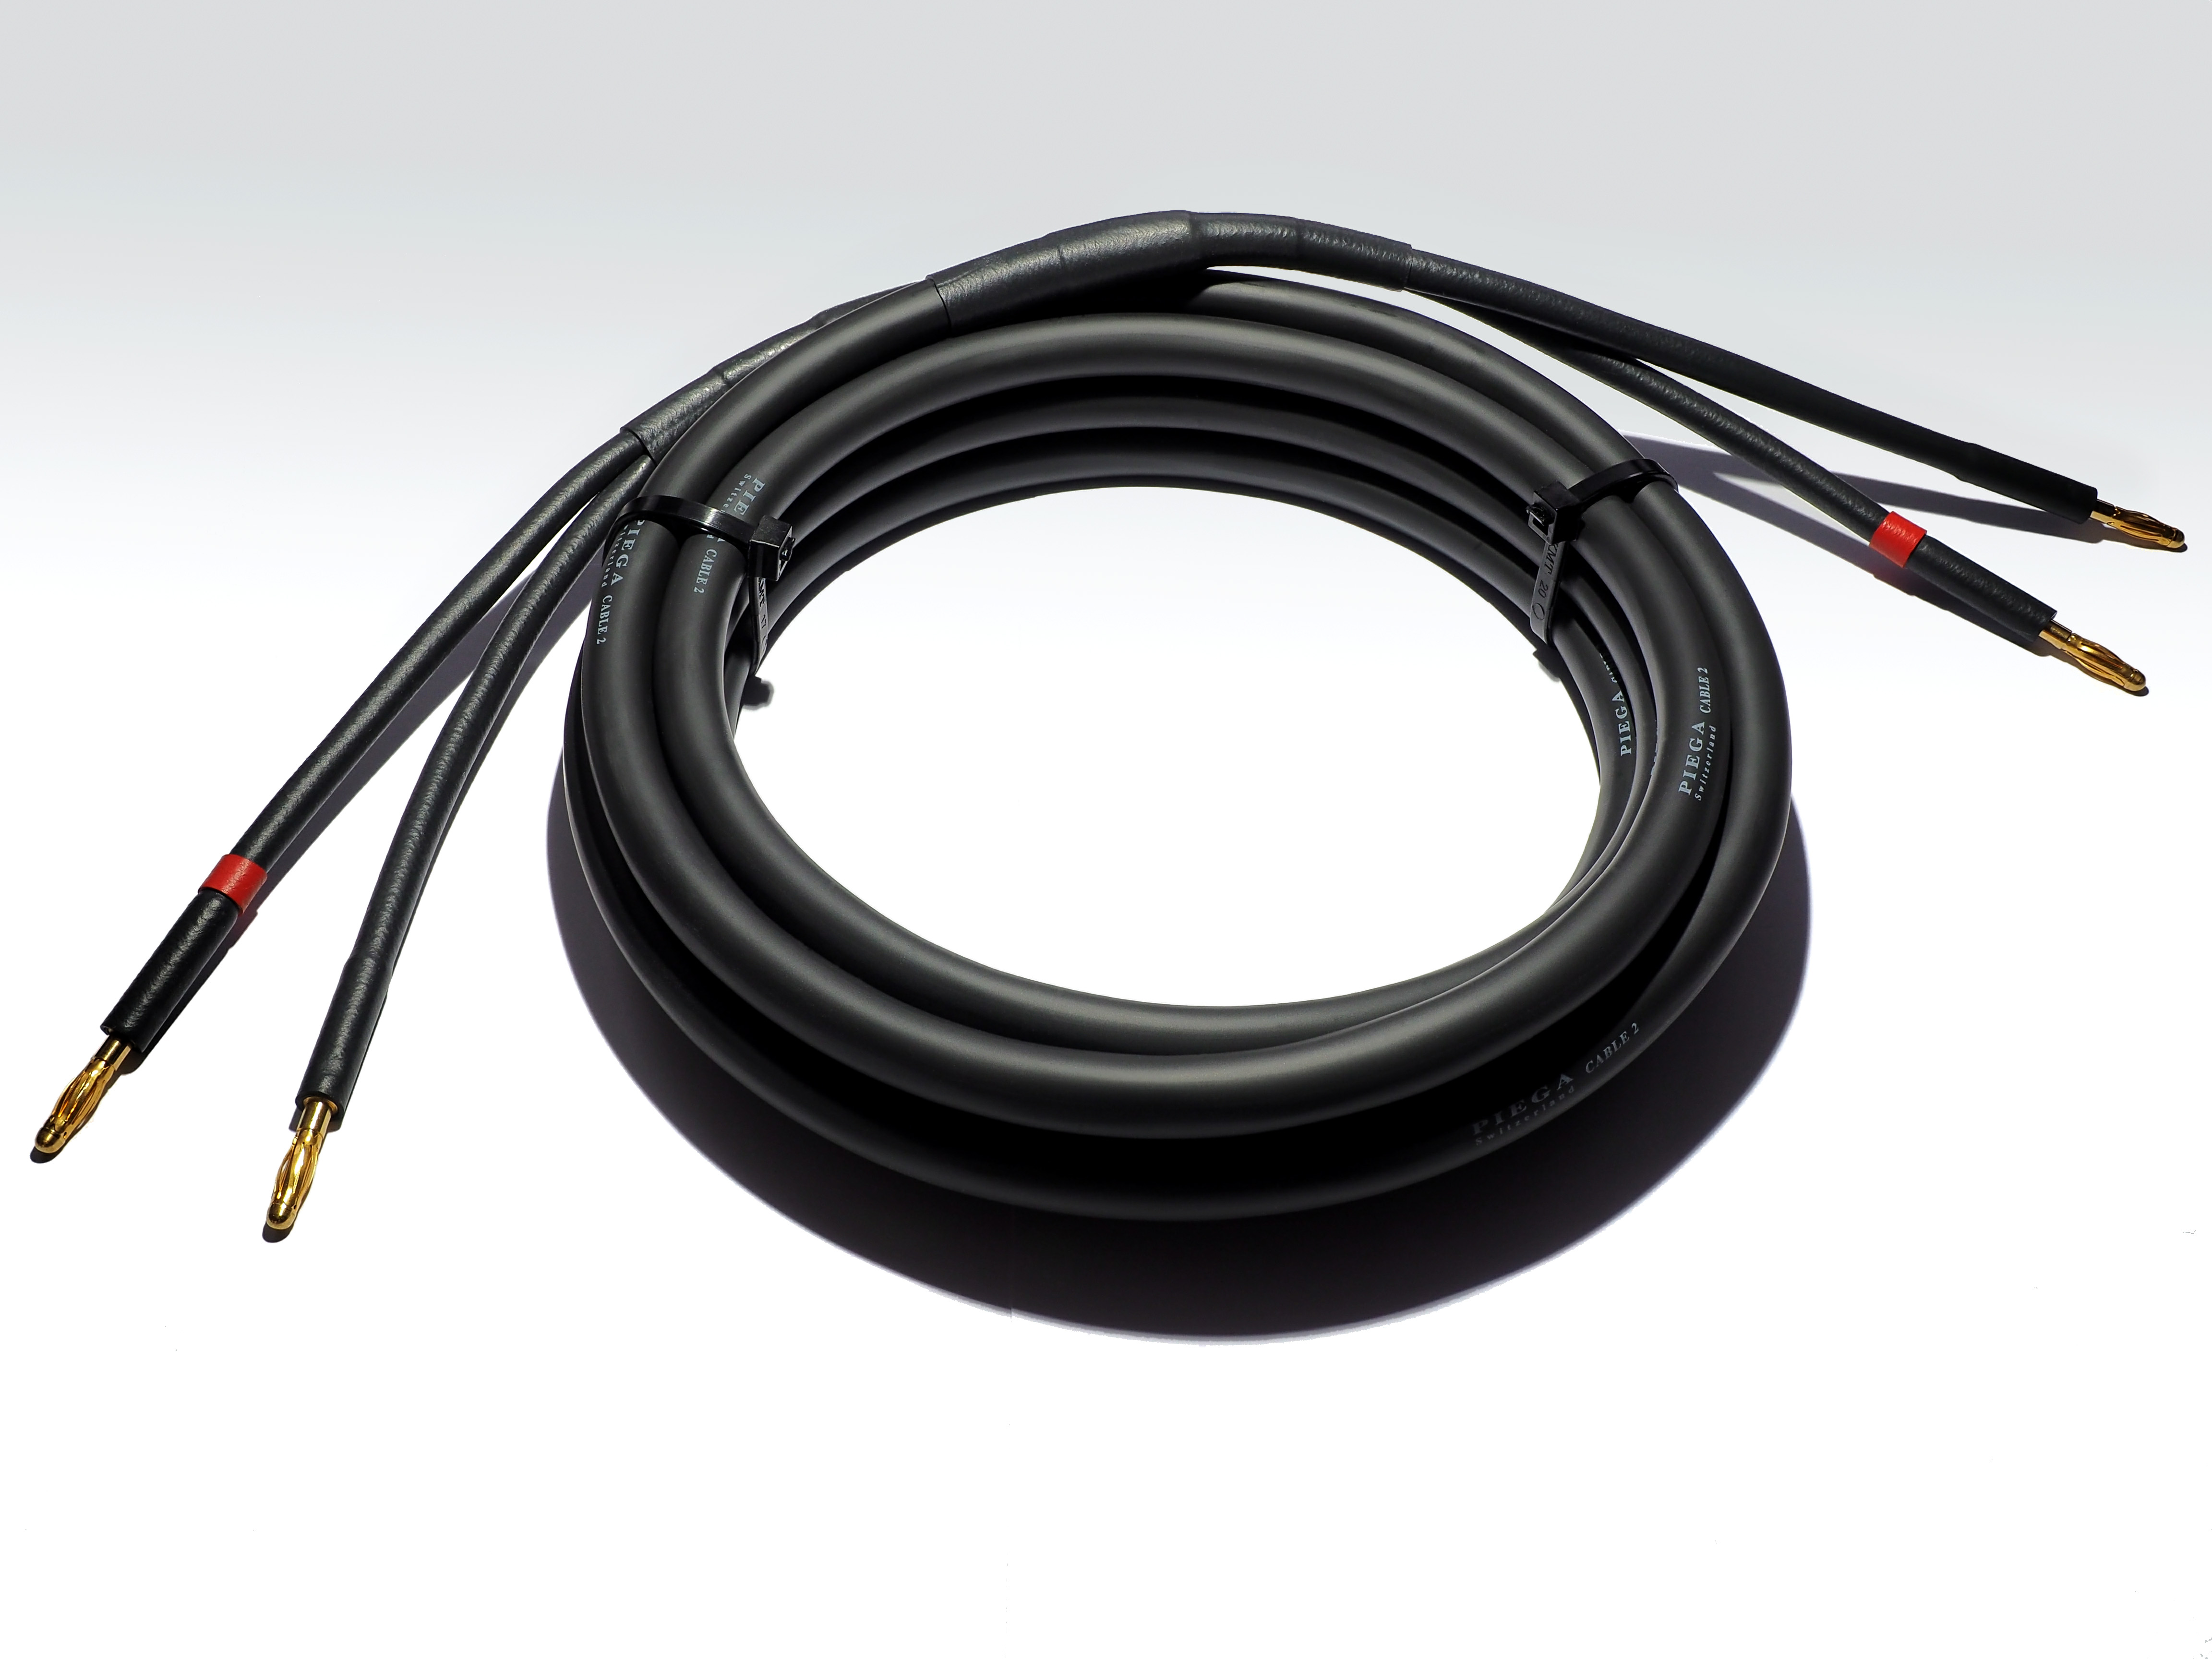 Piega Cable Two 2 x 3m / konfektioniert 24 kt. Banana Plugs / Single-Wire